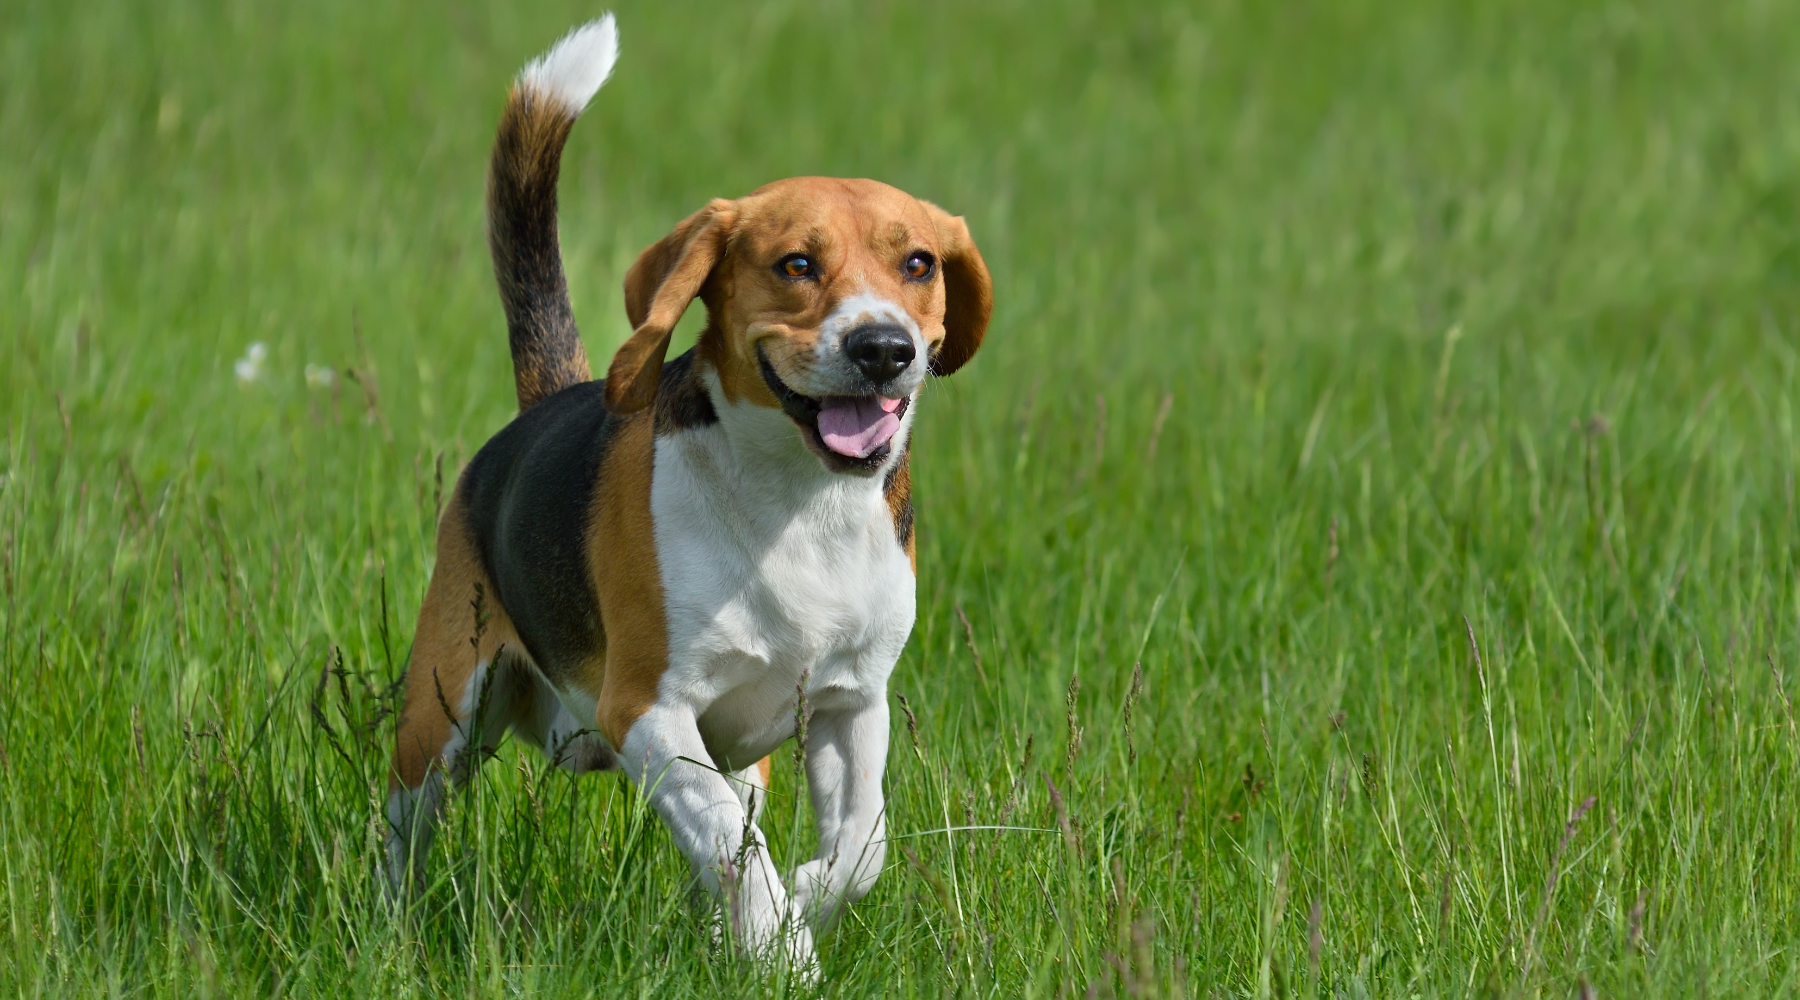 Beagle running on grass